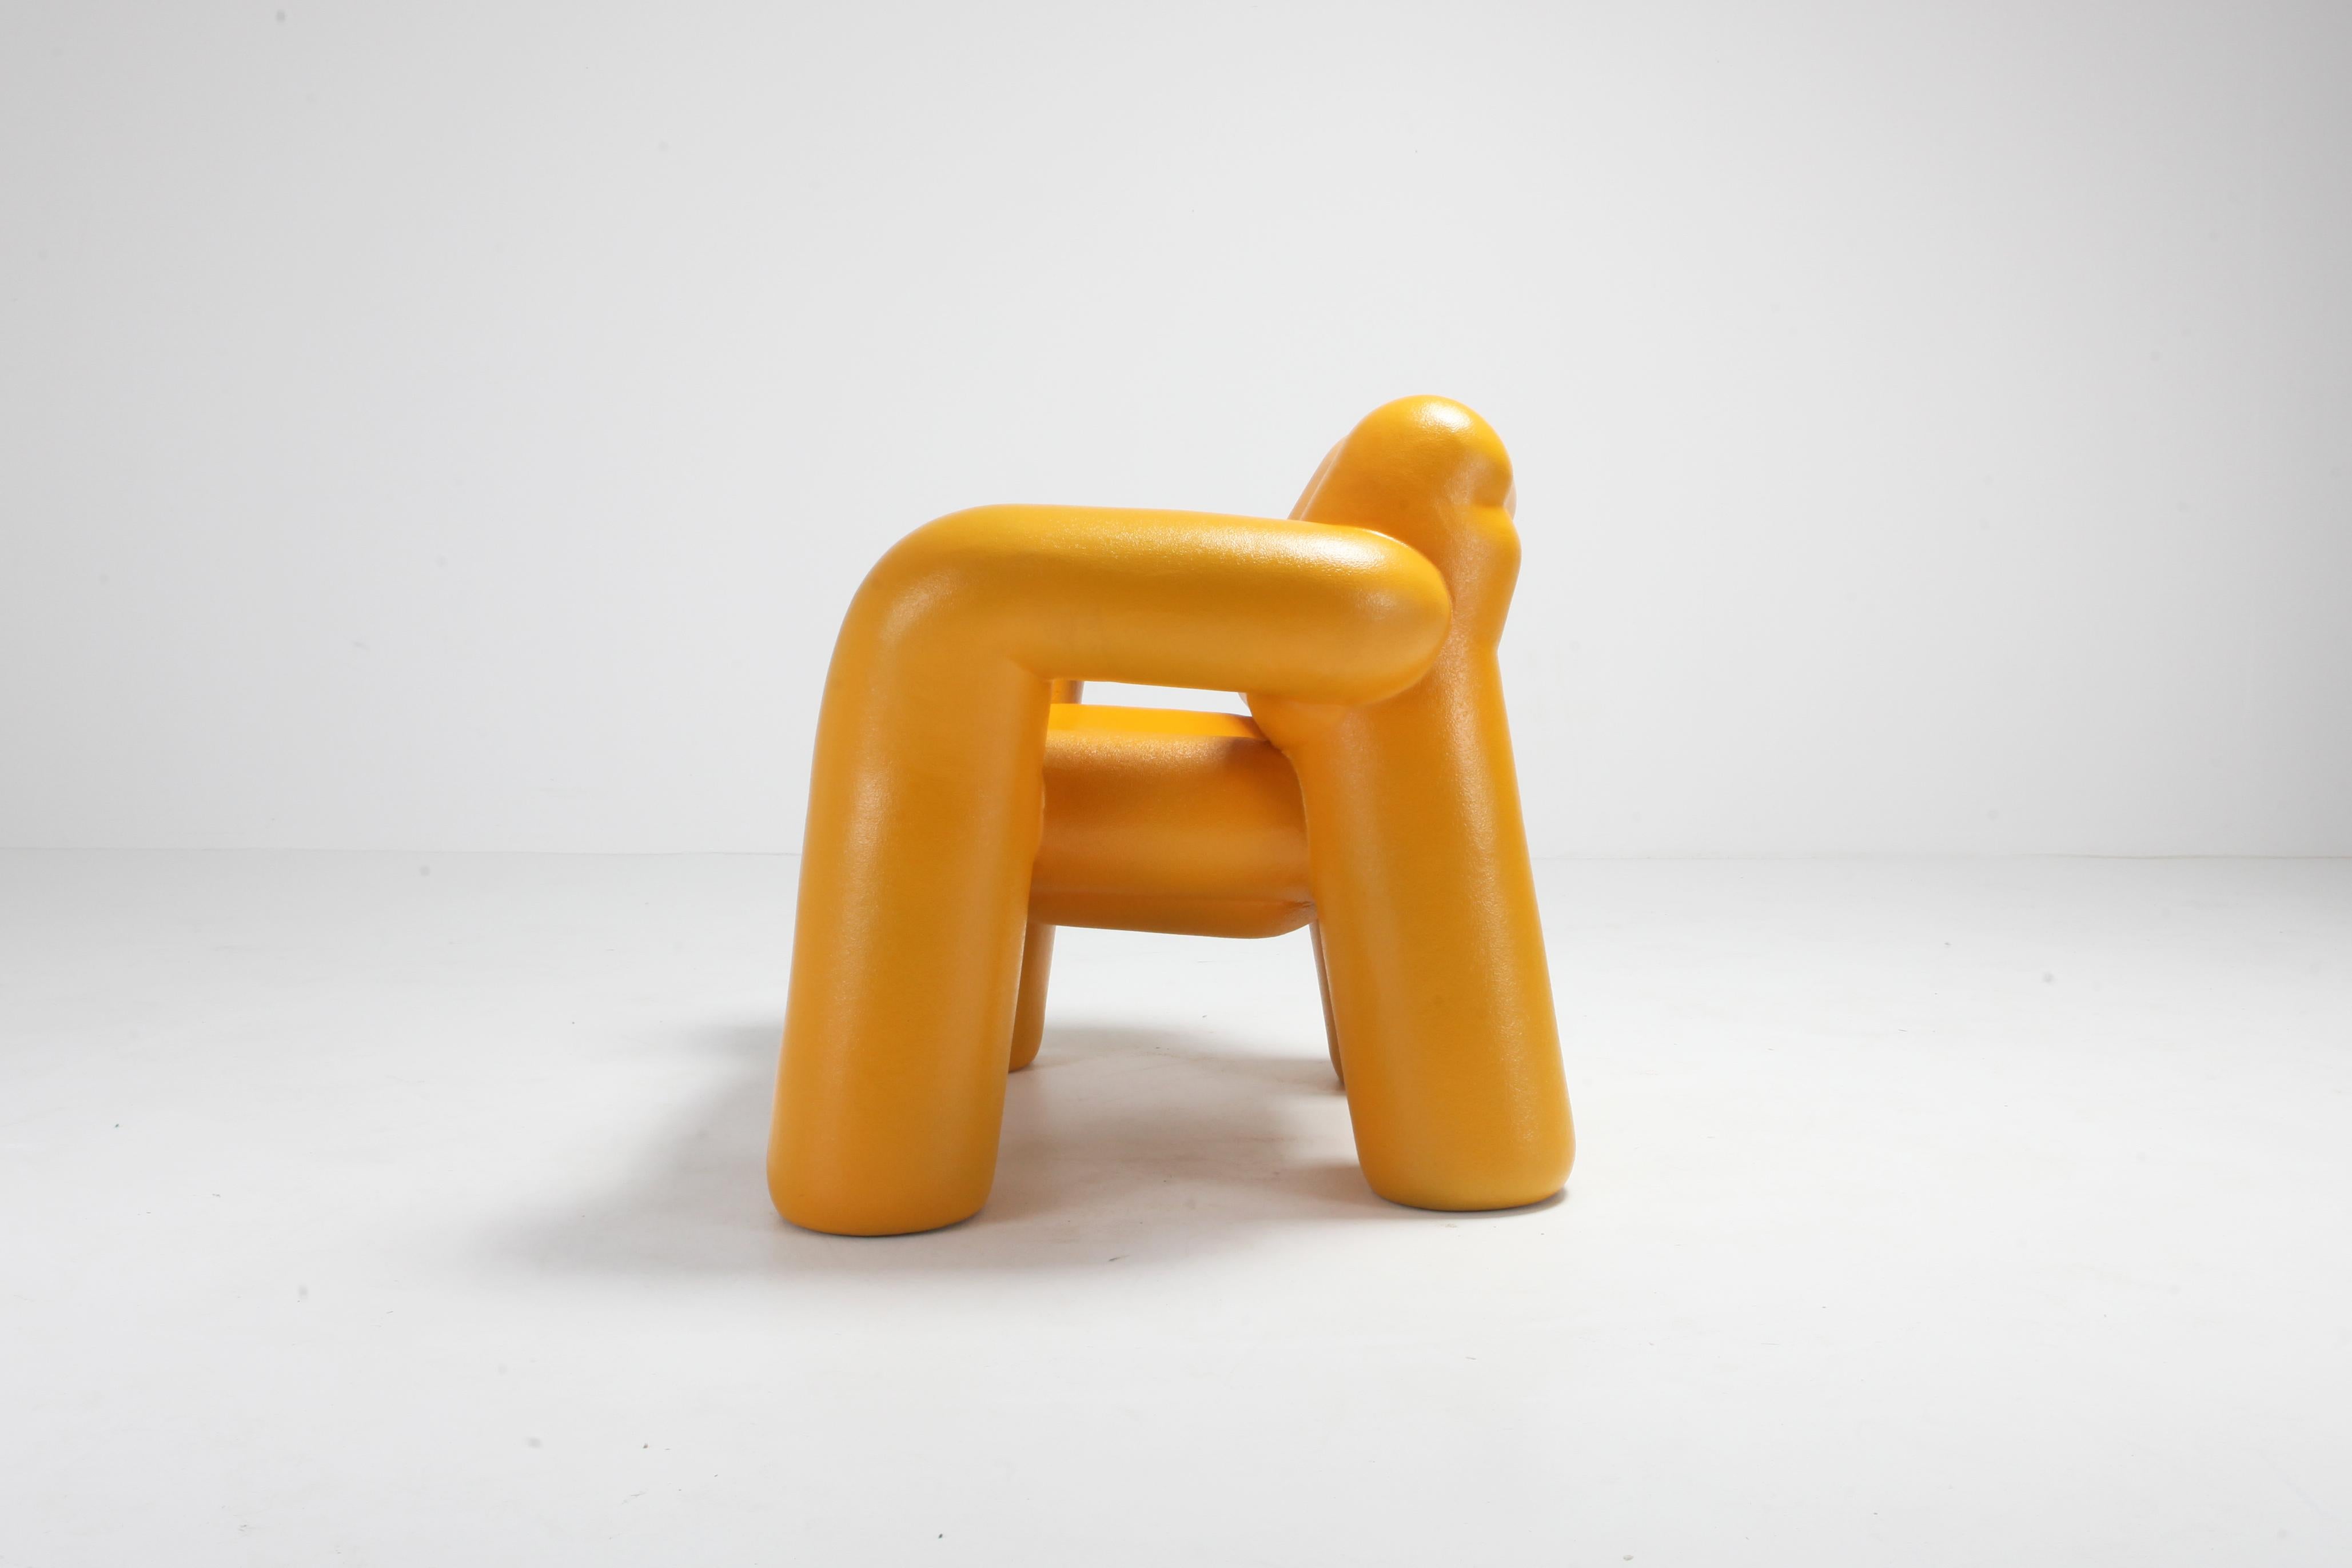 Post-Modern Blown-Up Chair by Schimmel & Schweikle 